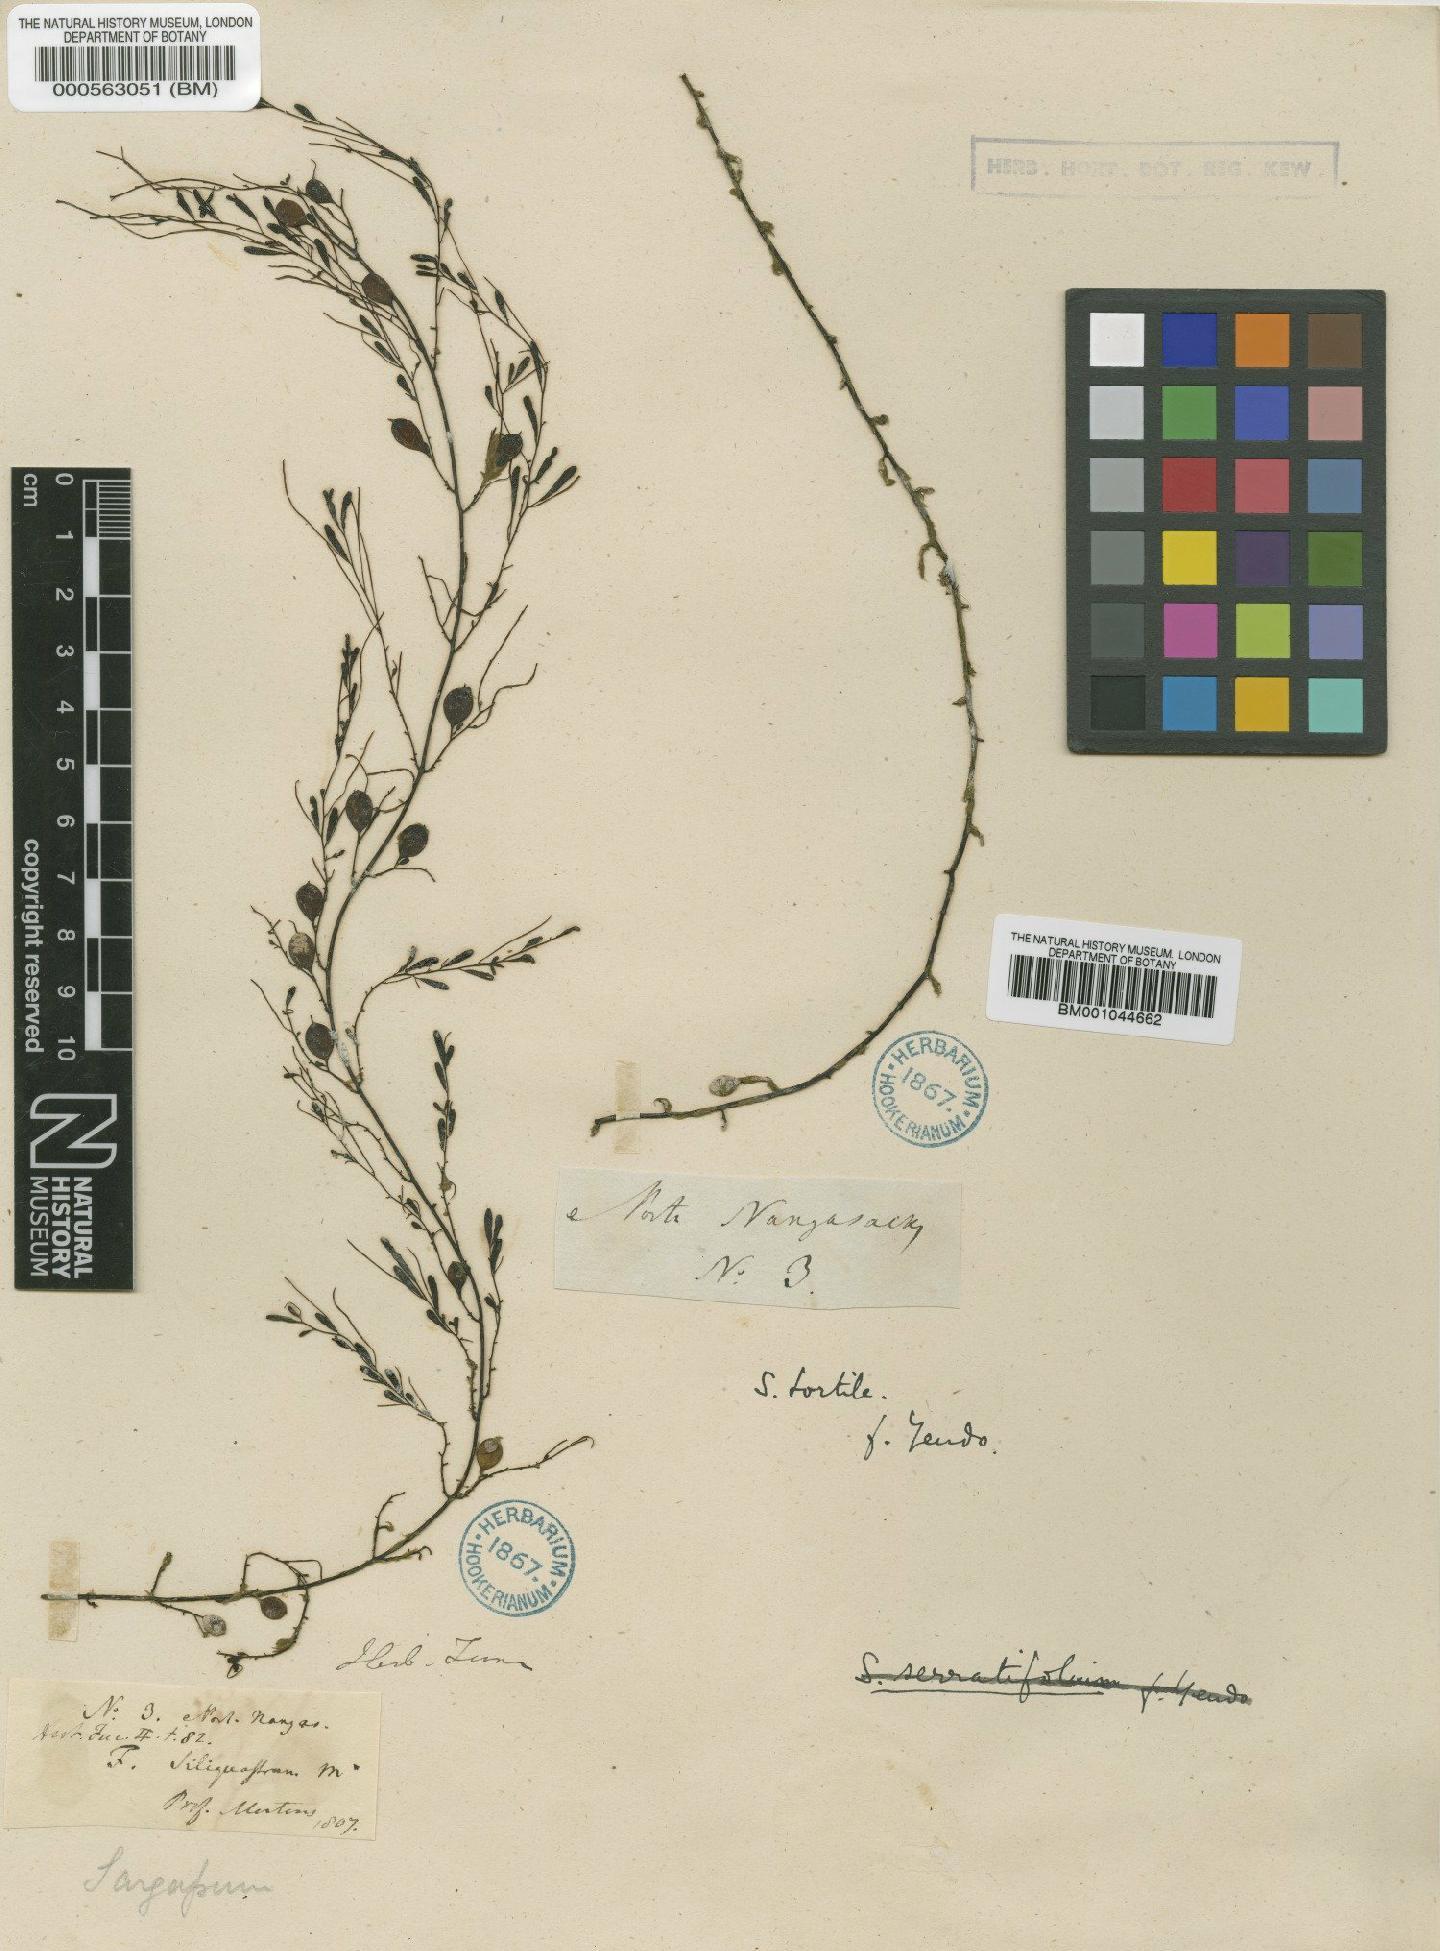 To NHMUK collection (Sargassum siliquastrum (Mert. ex Turner) C.Agardh; Isosyntype; NHMUK:ecatalogue:4722170)